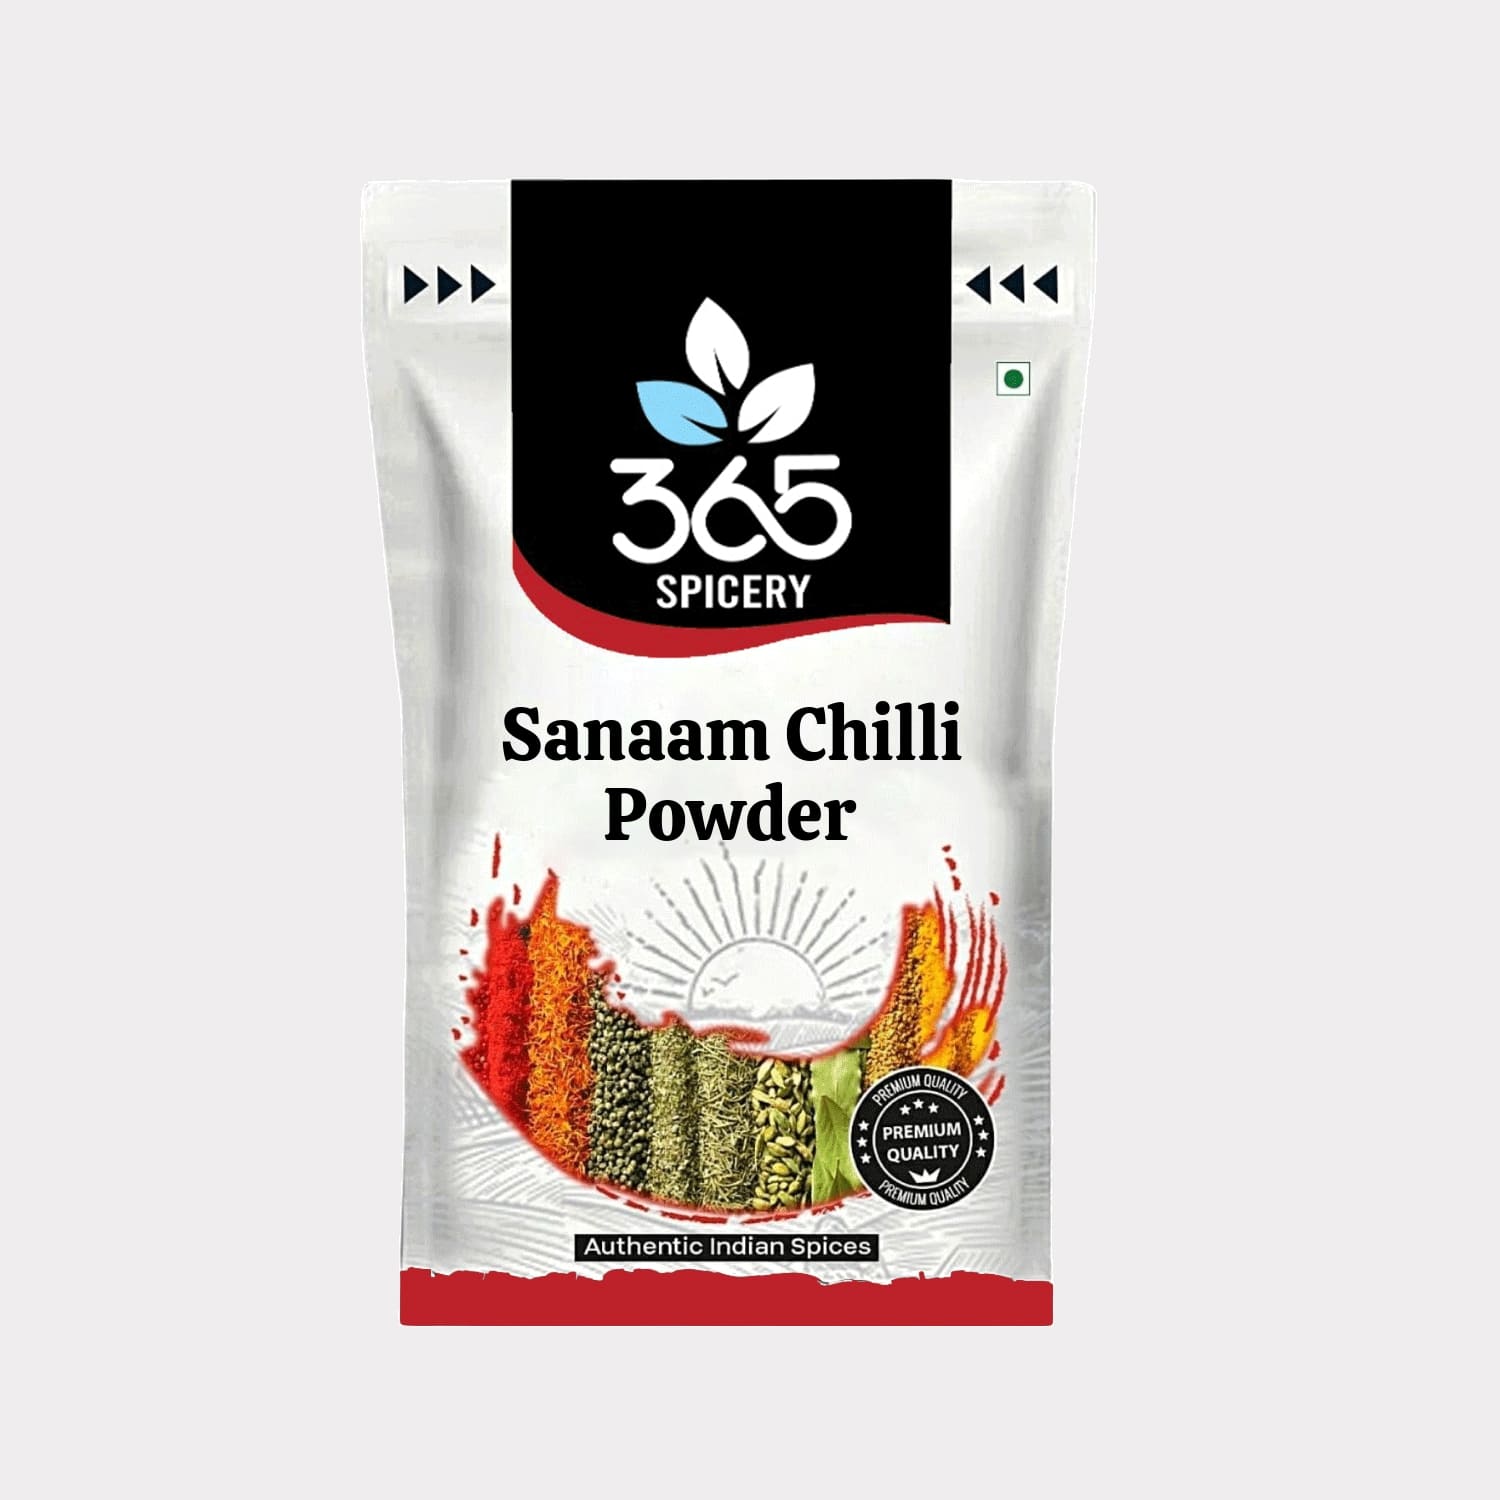 Sanaam Chilli Powder